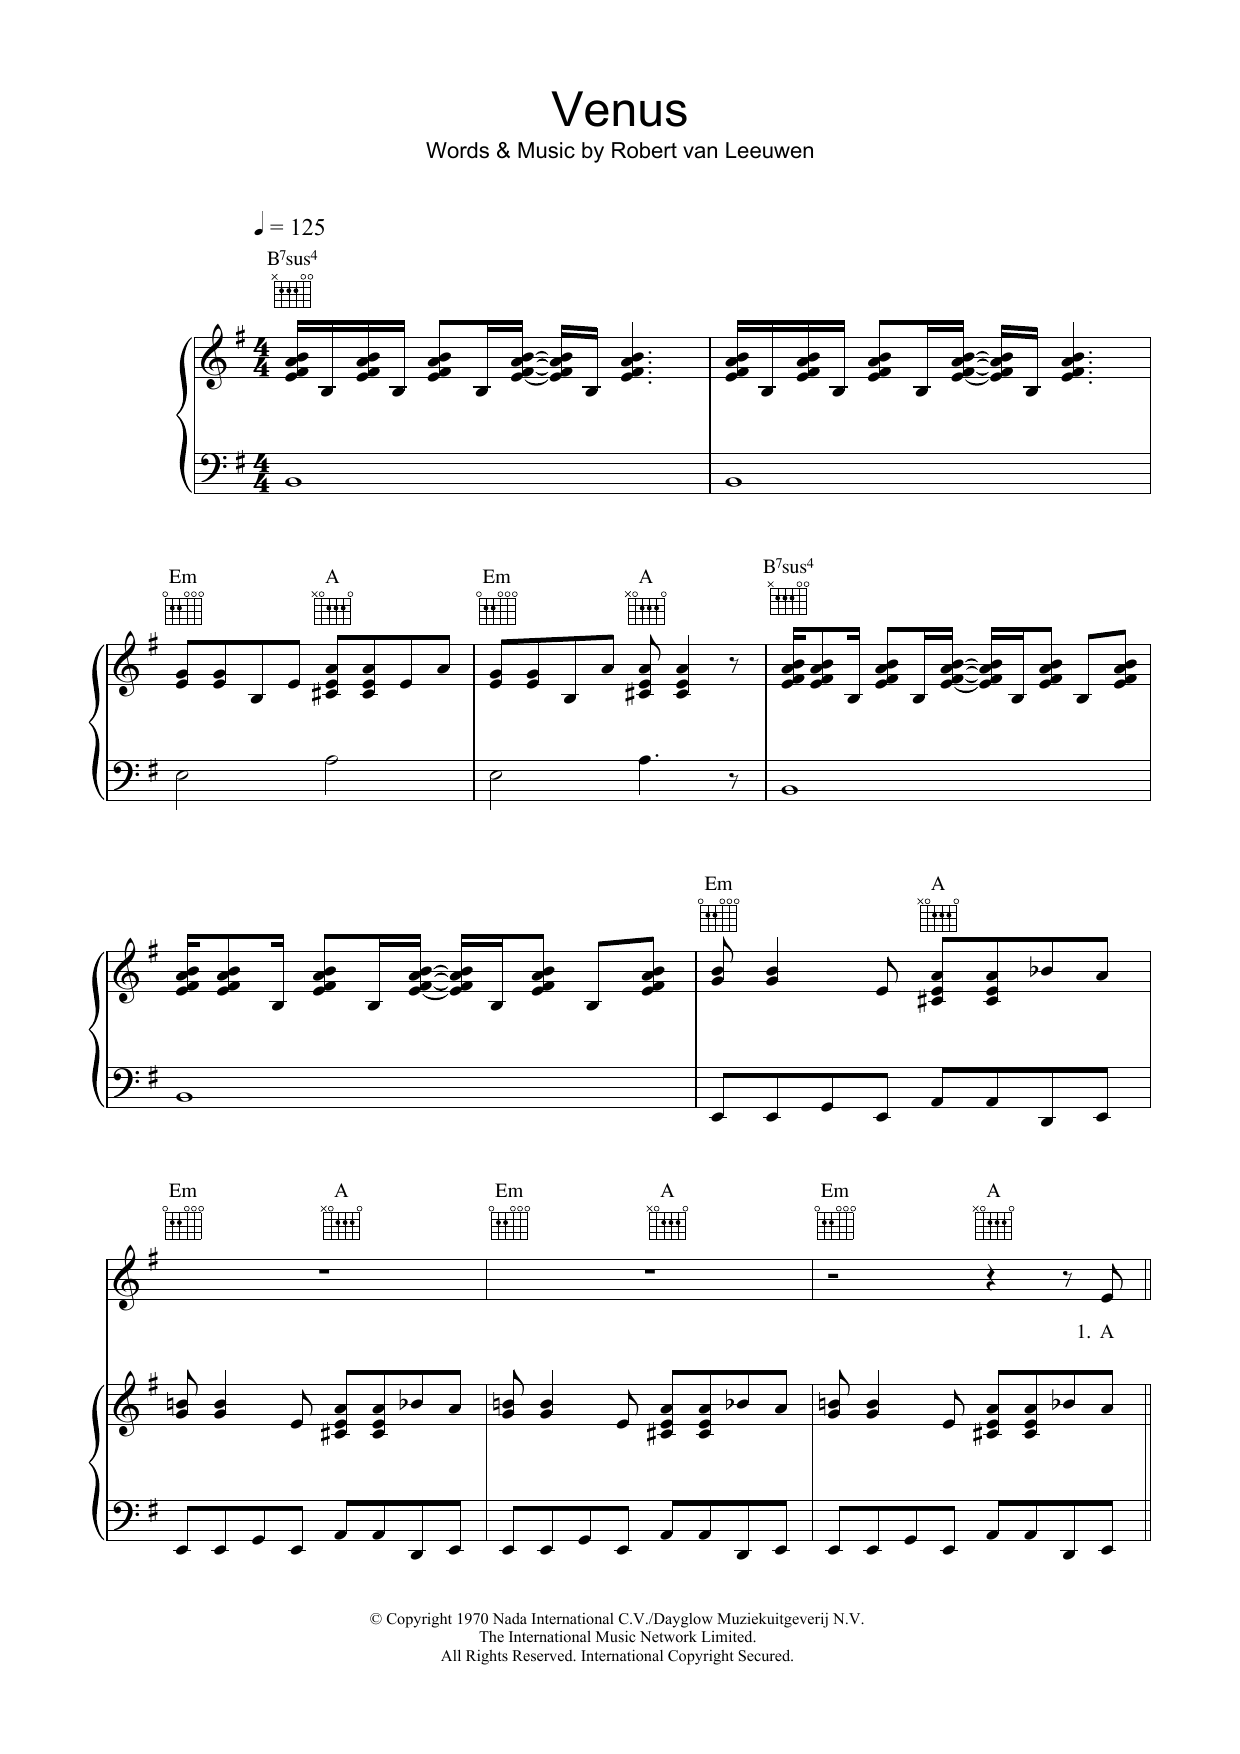 Bananarama Venus sheet music notes and chords arranged for Piano, Vocal & Guitar Chords